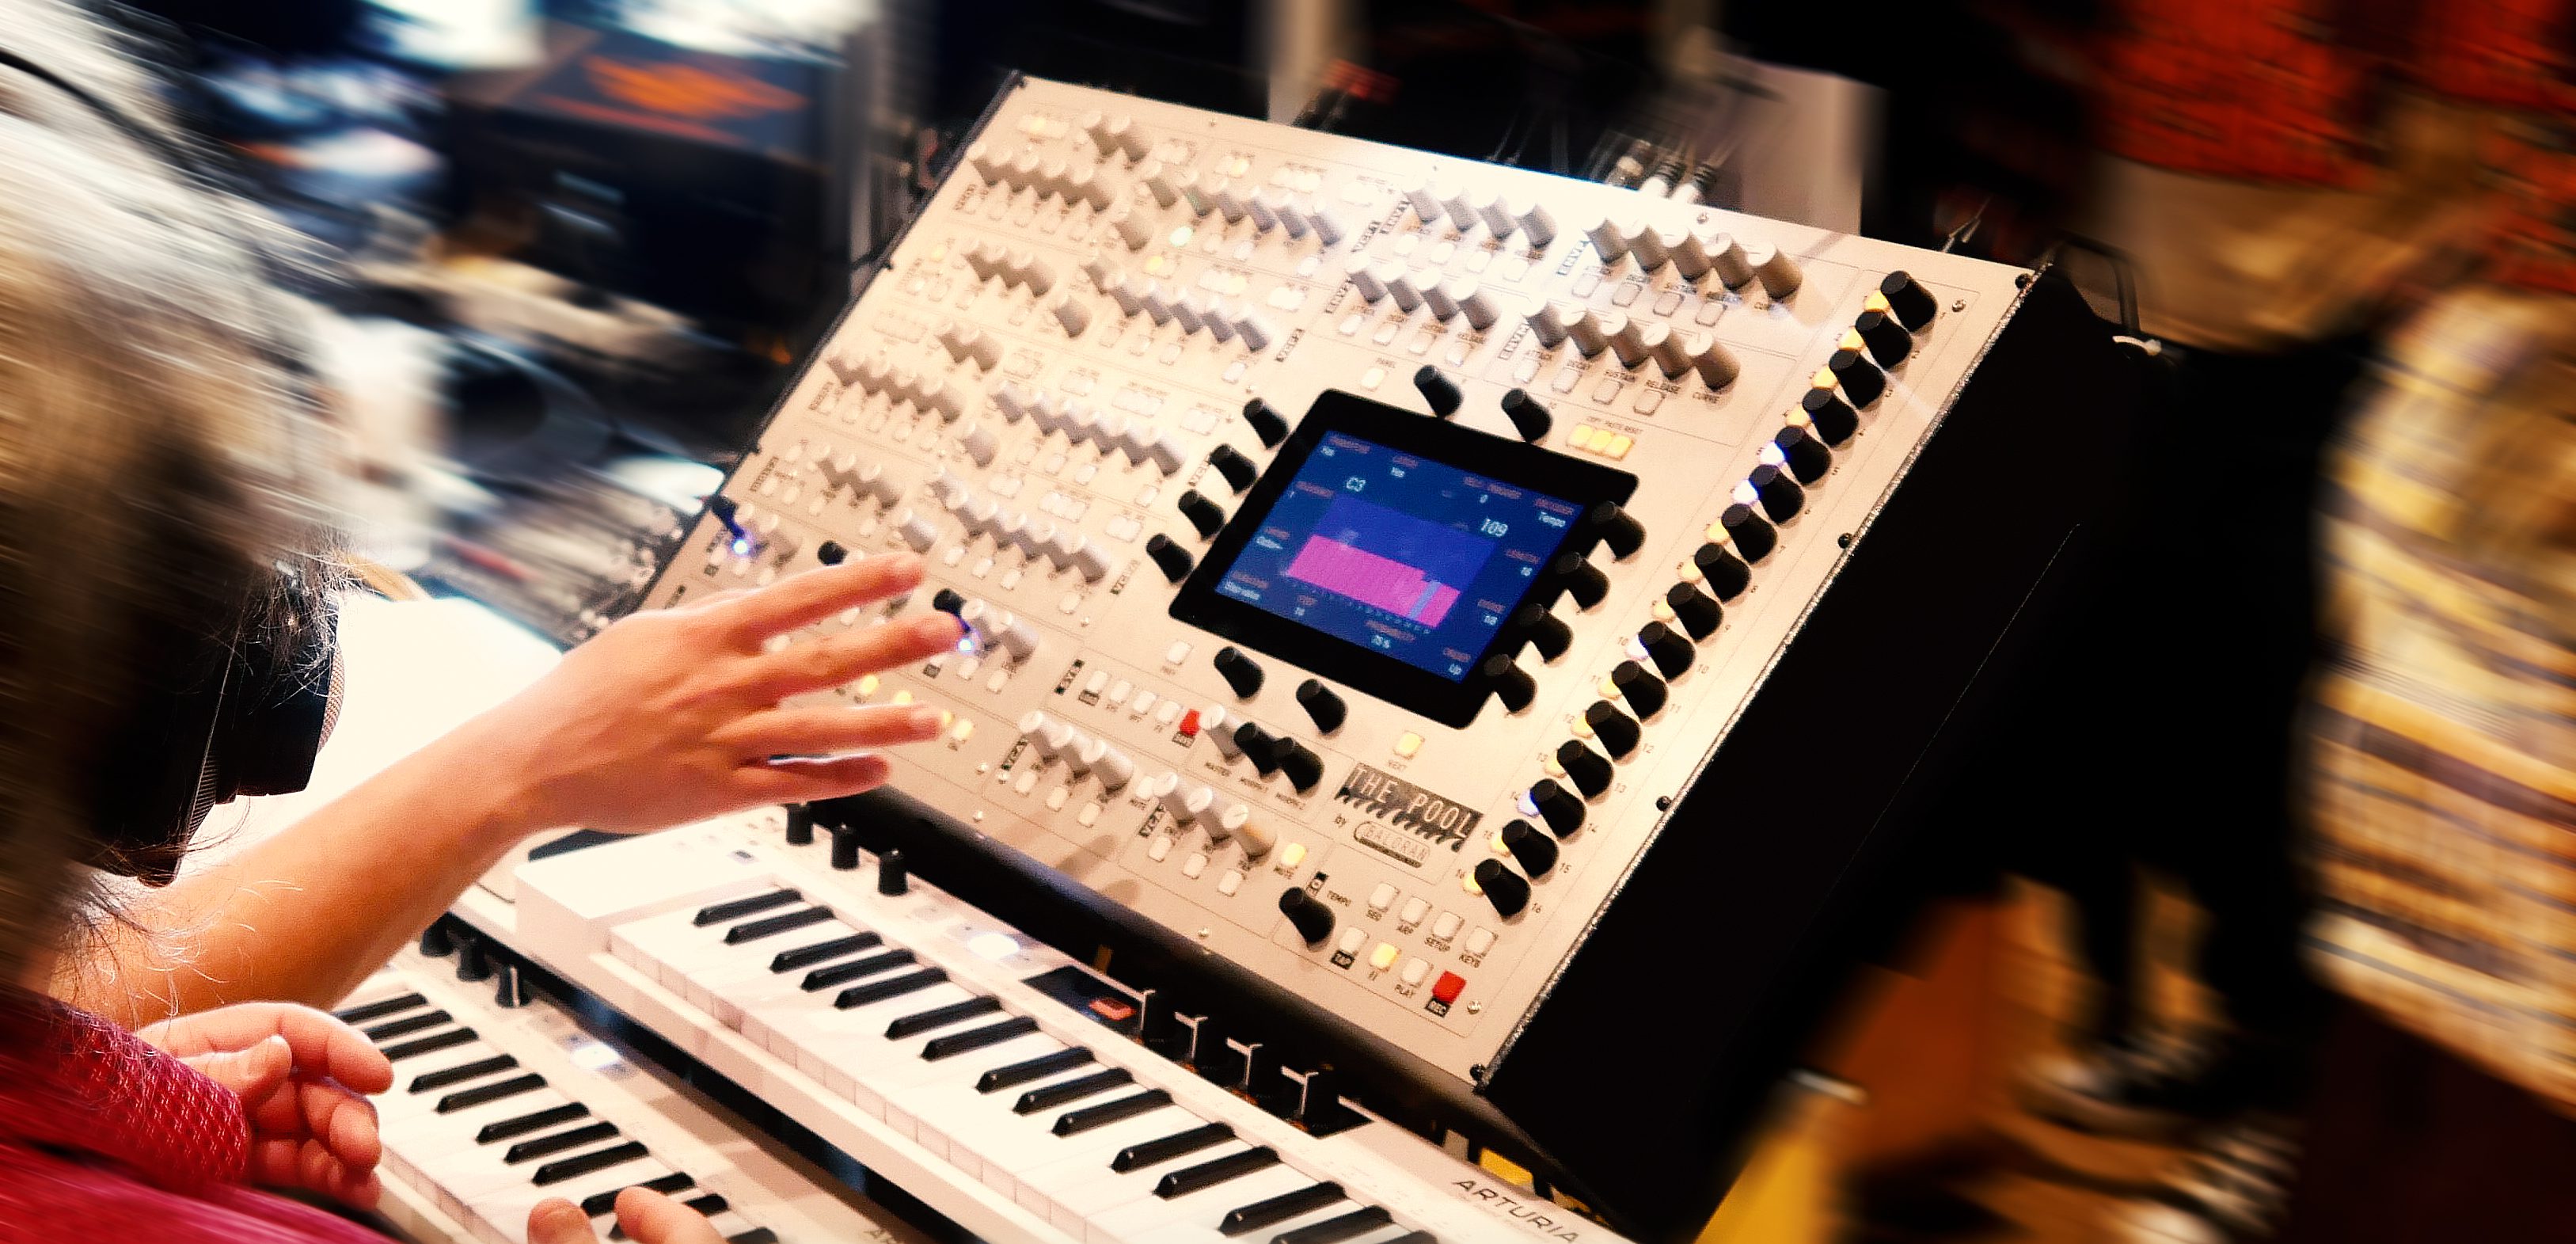 Yann Tiersen modular Synthesizer live set at Superbooth 21